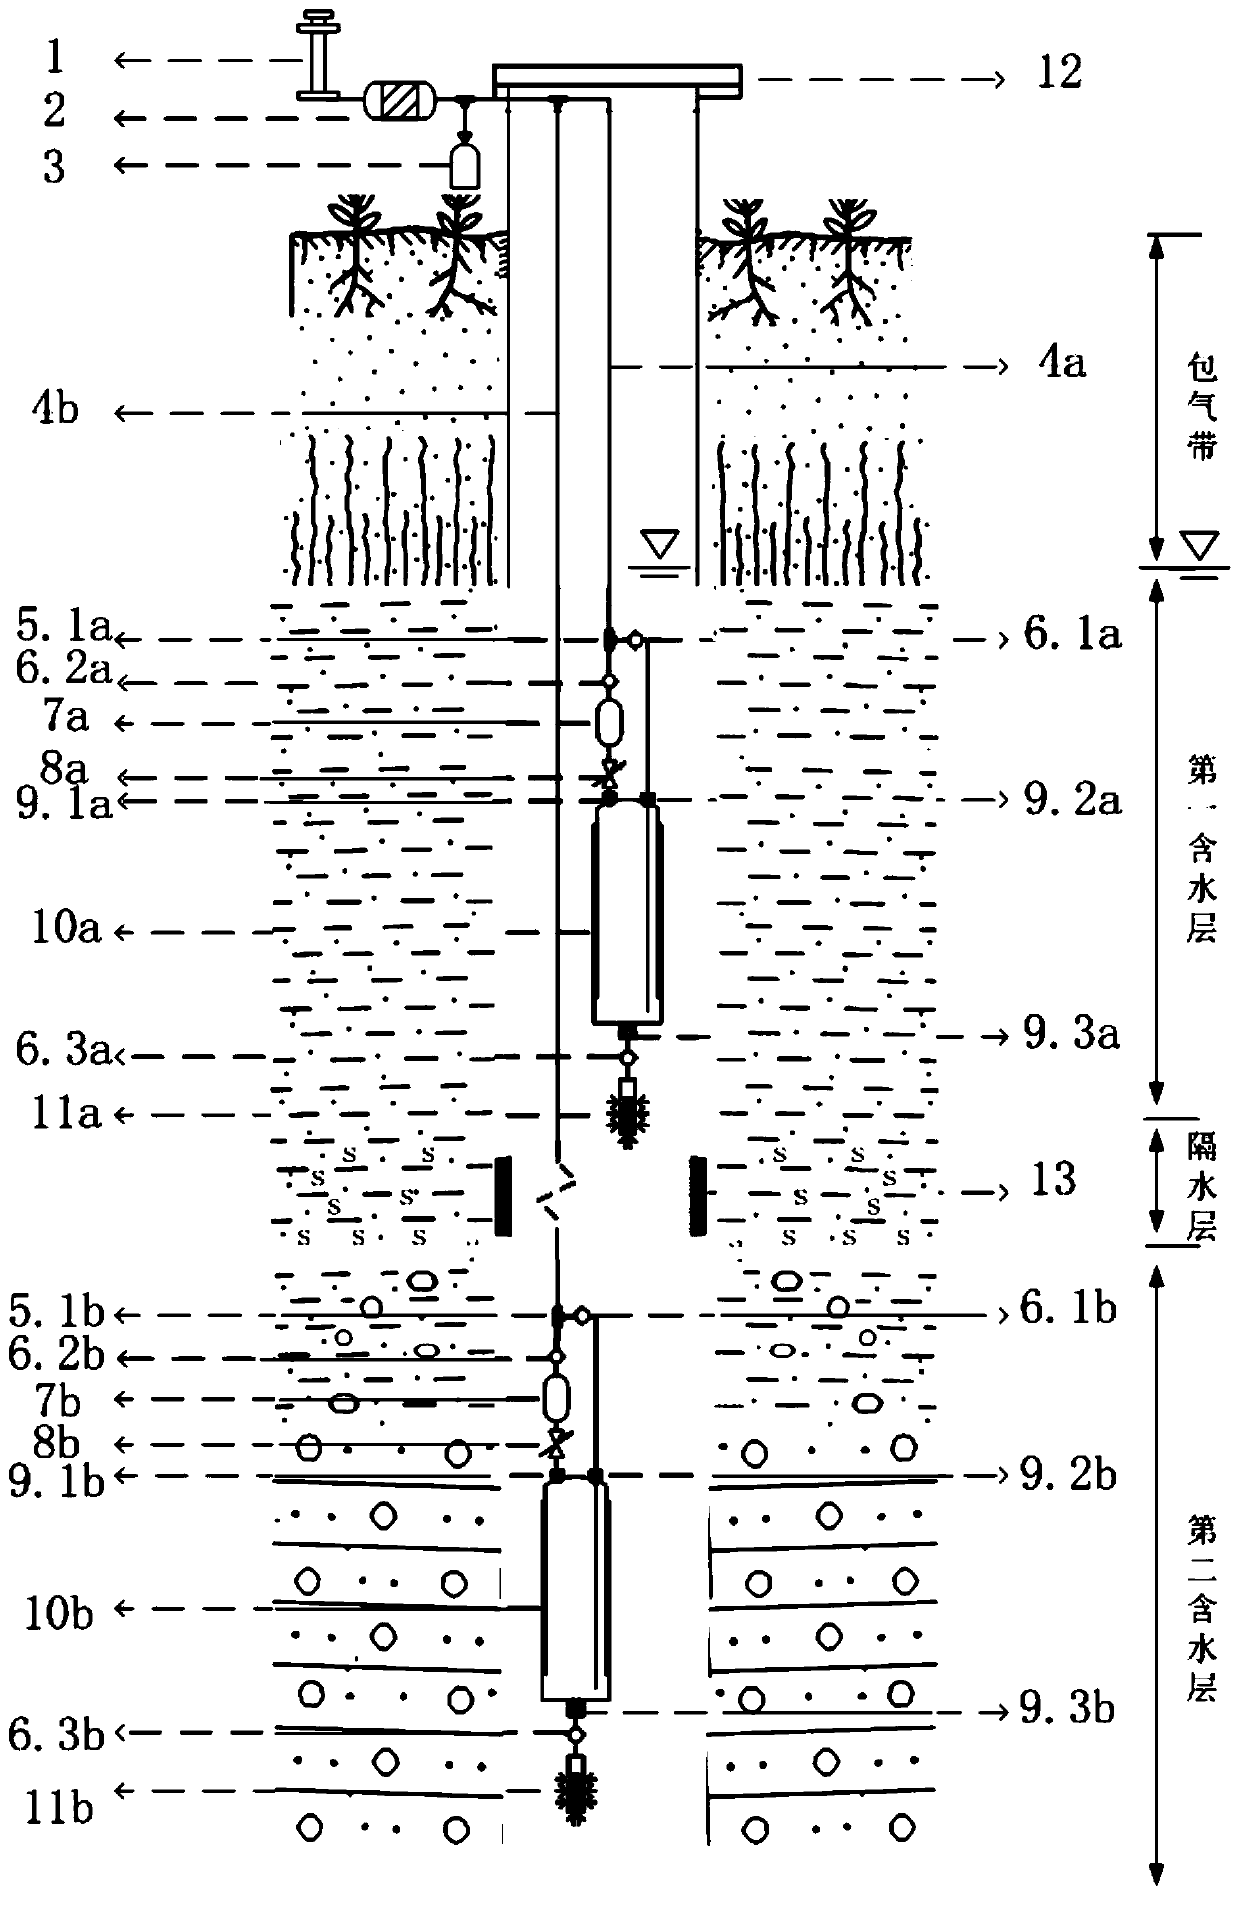 Underground water single-tube pulse stratified sampling device based on gas drive principle